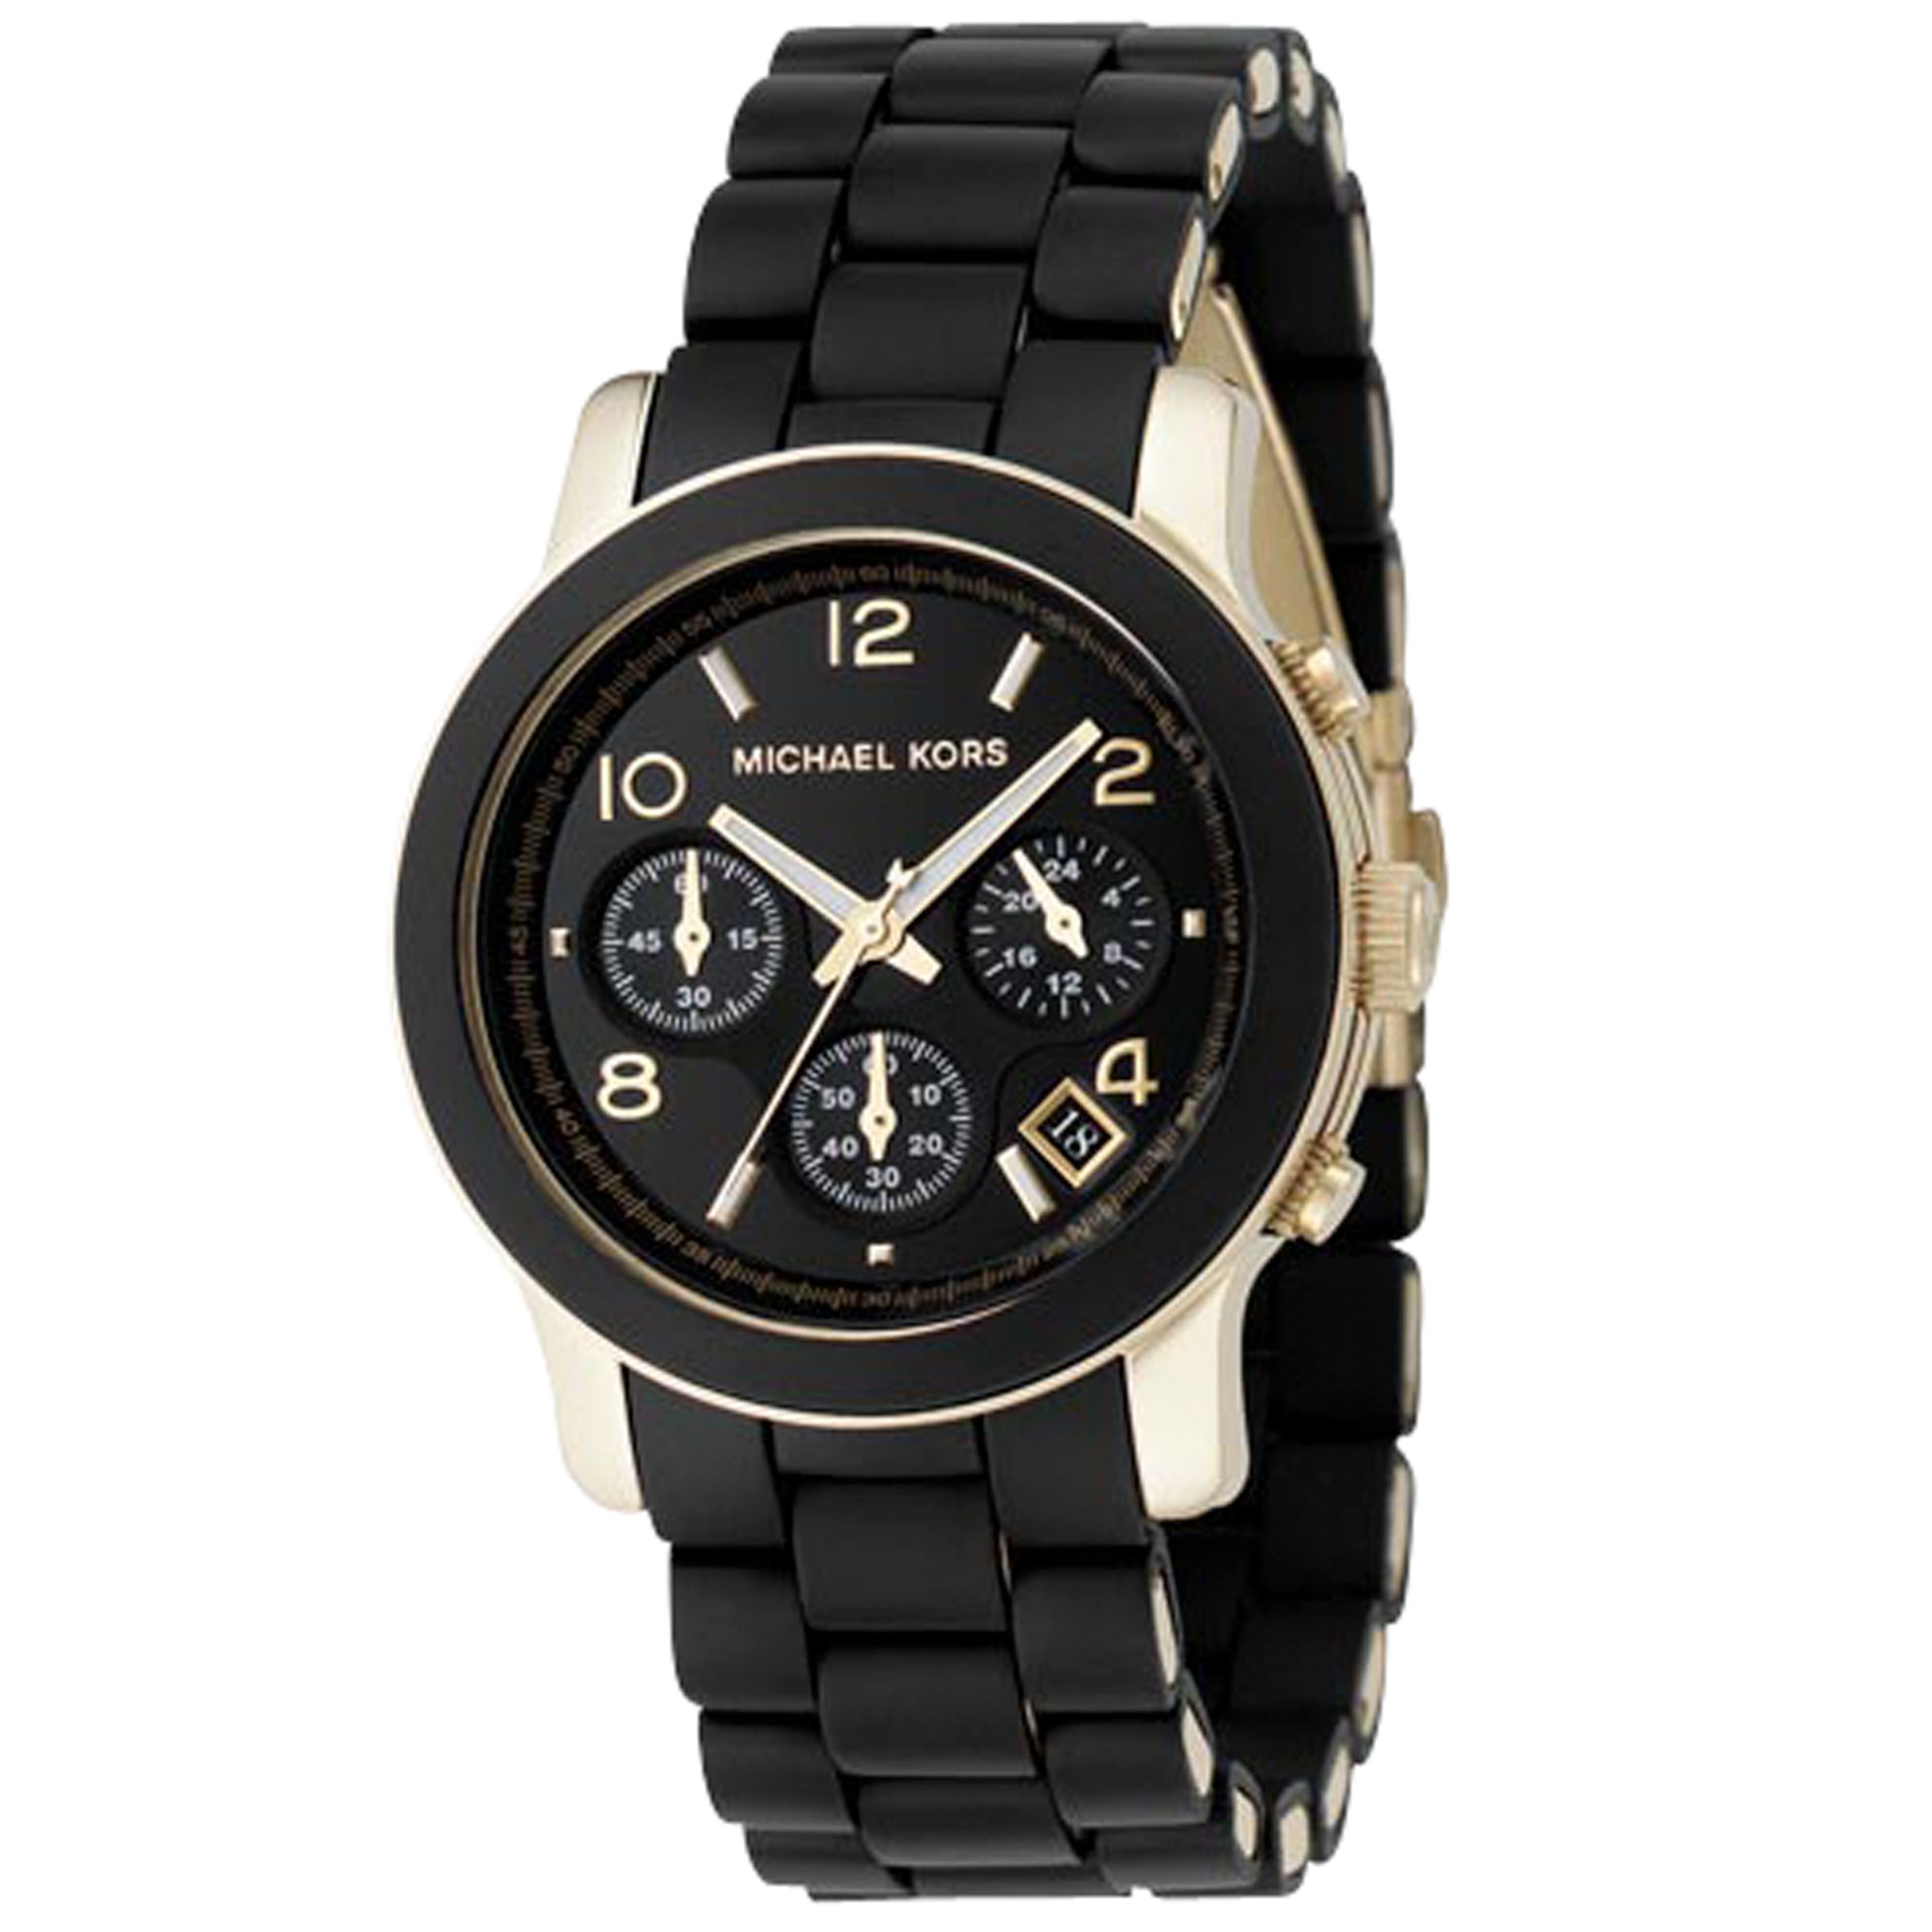 Michael Kors MK5191 Sport Chronograph Watch at JohnLewis